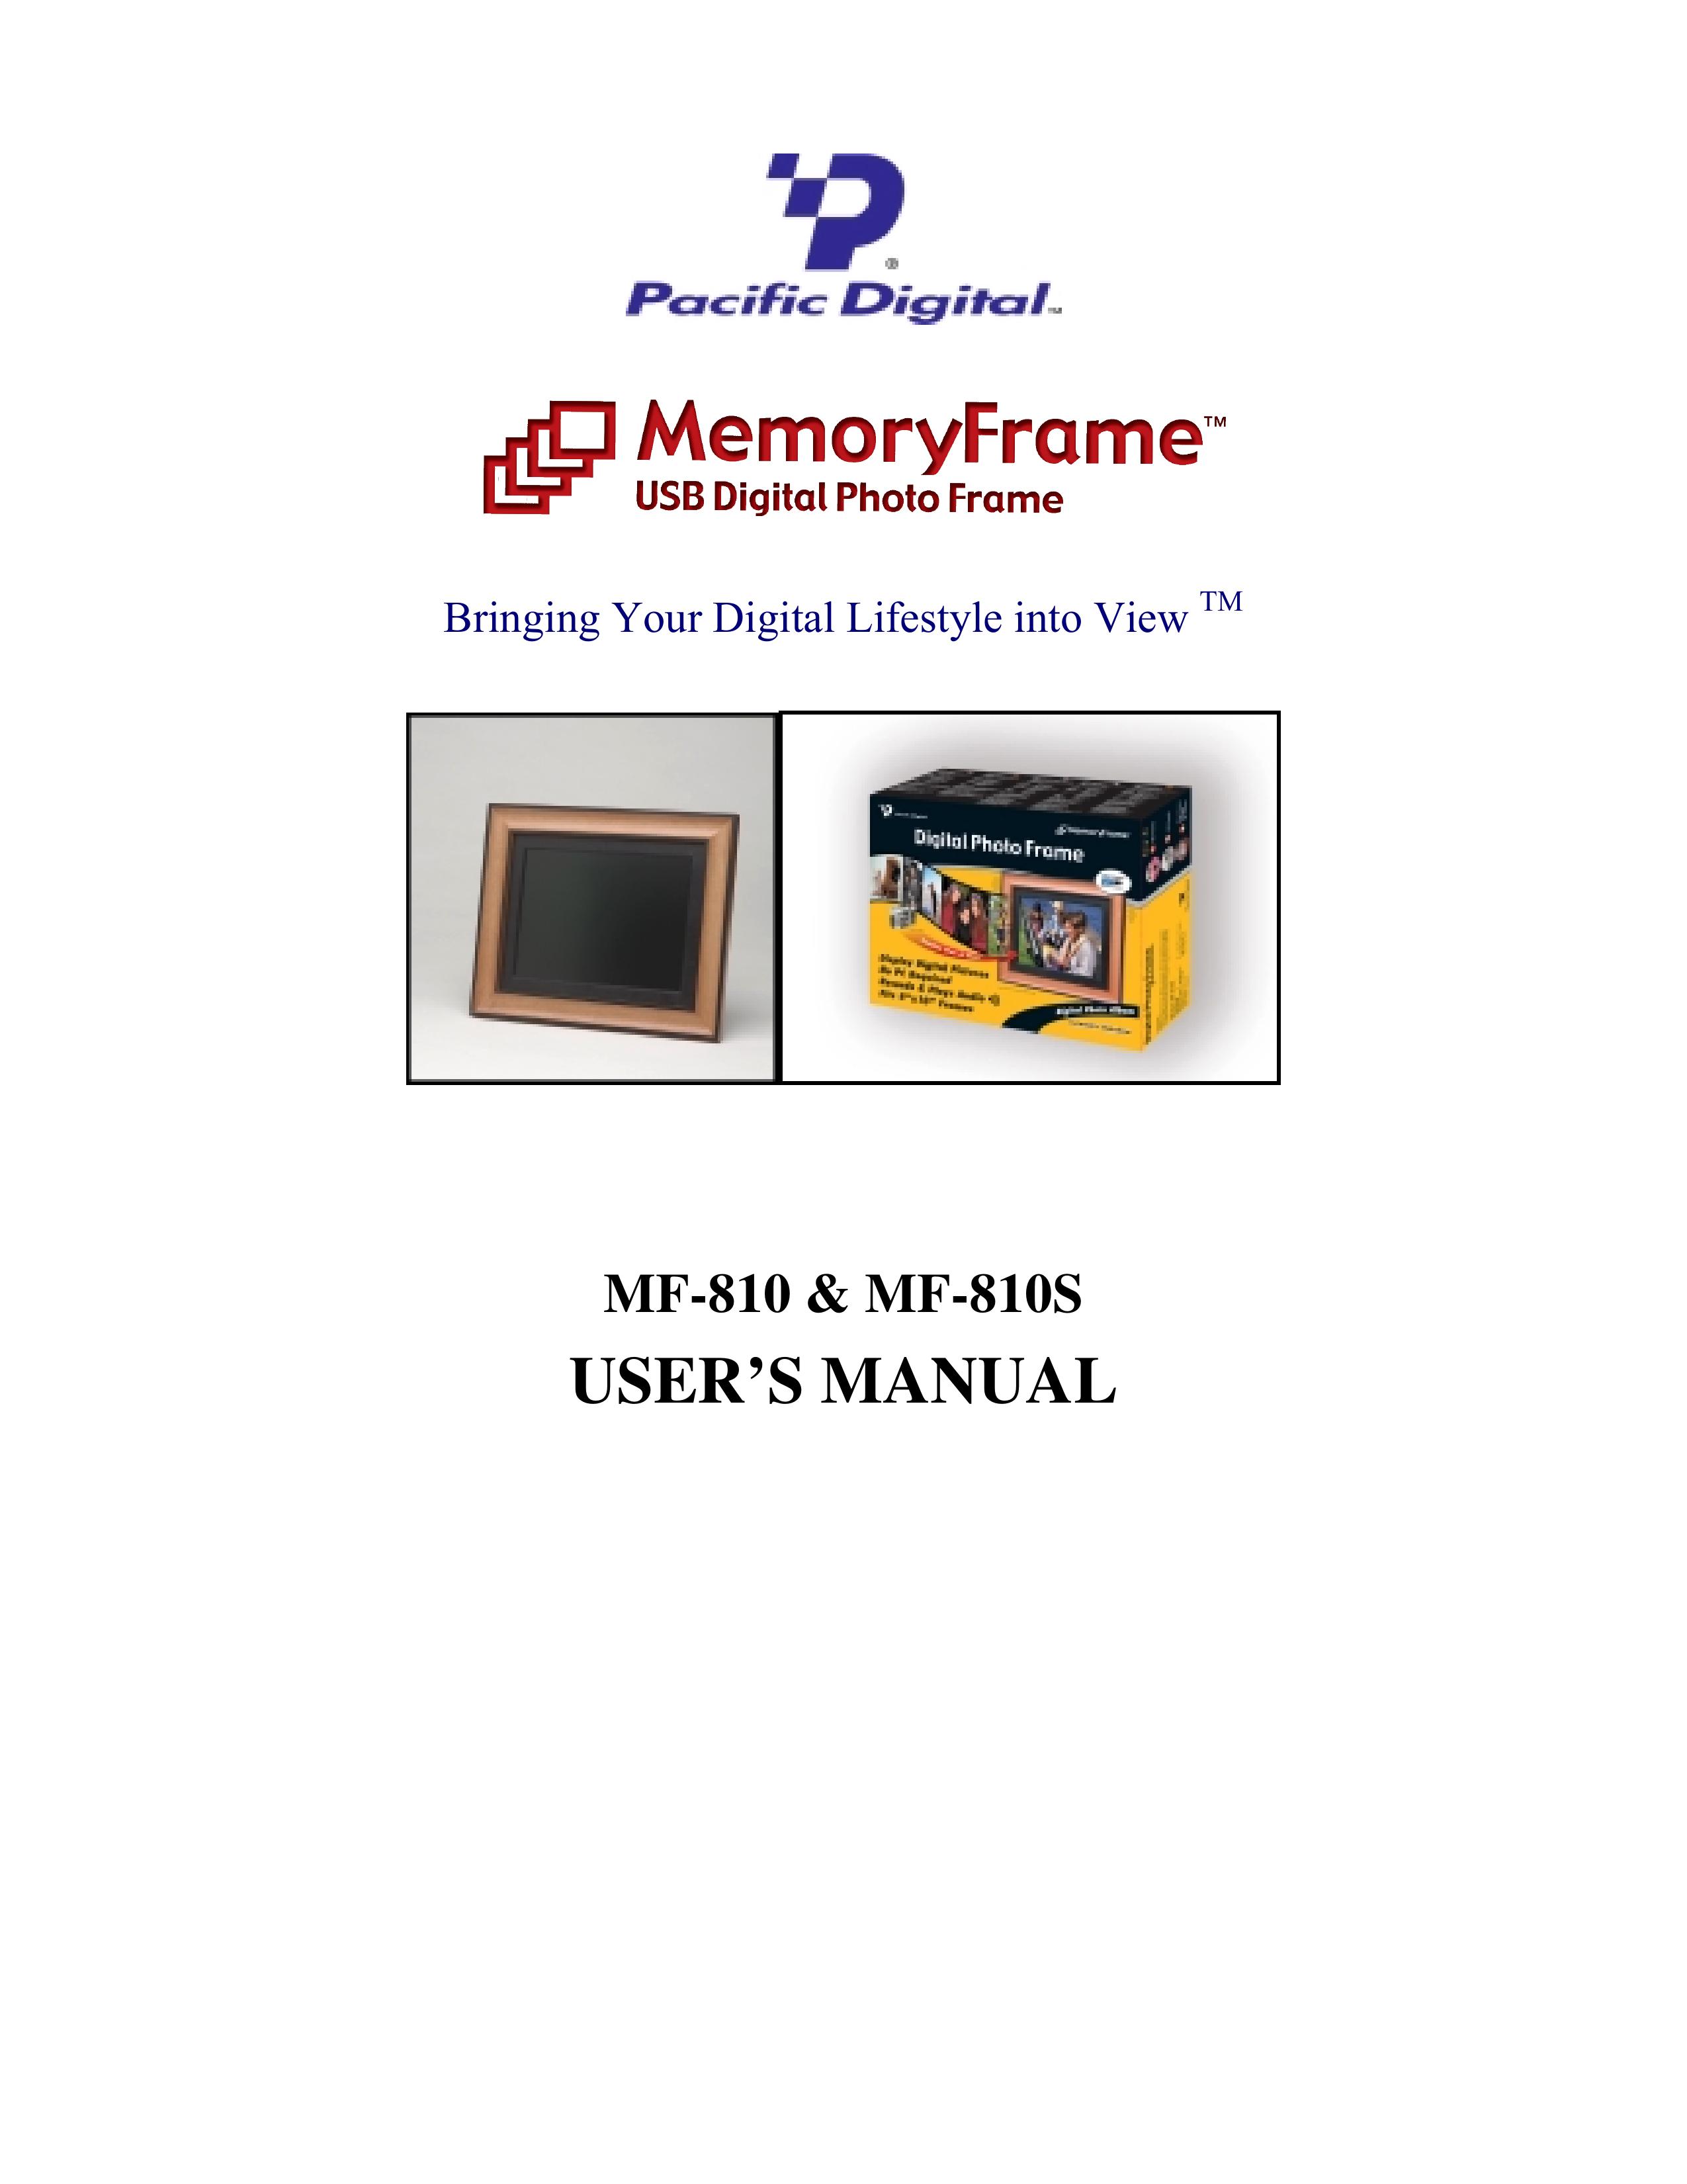 Pacific Digital MF-810 Digital Photo Frame User Manual